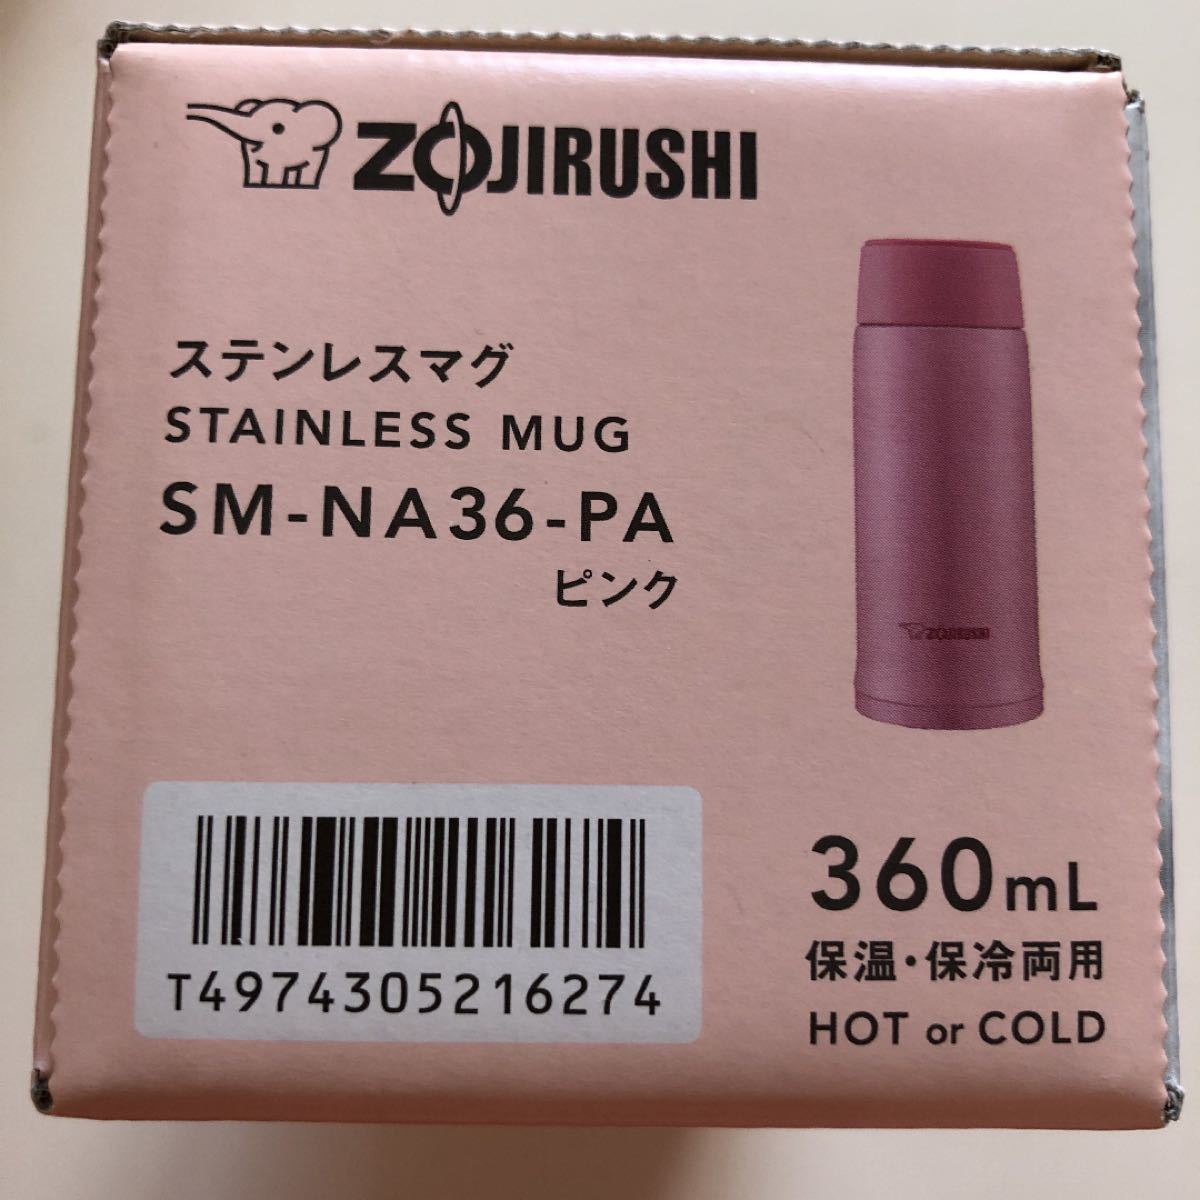 ZOJIRUSHI 象印水筒 ステンレスマグ 360ml 2本セット 黒 ピンク